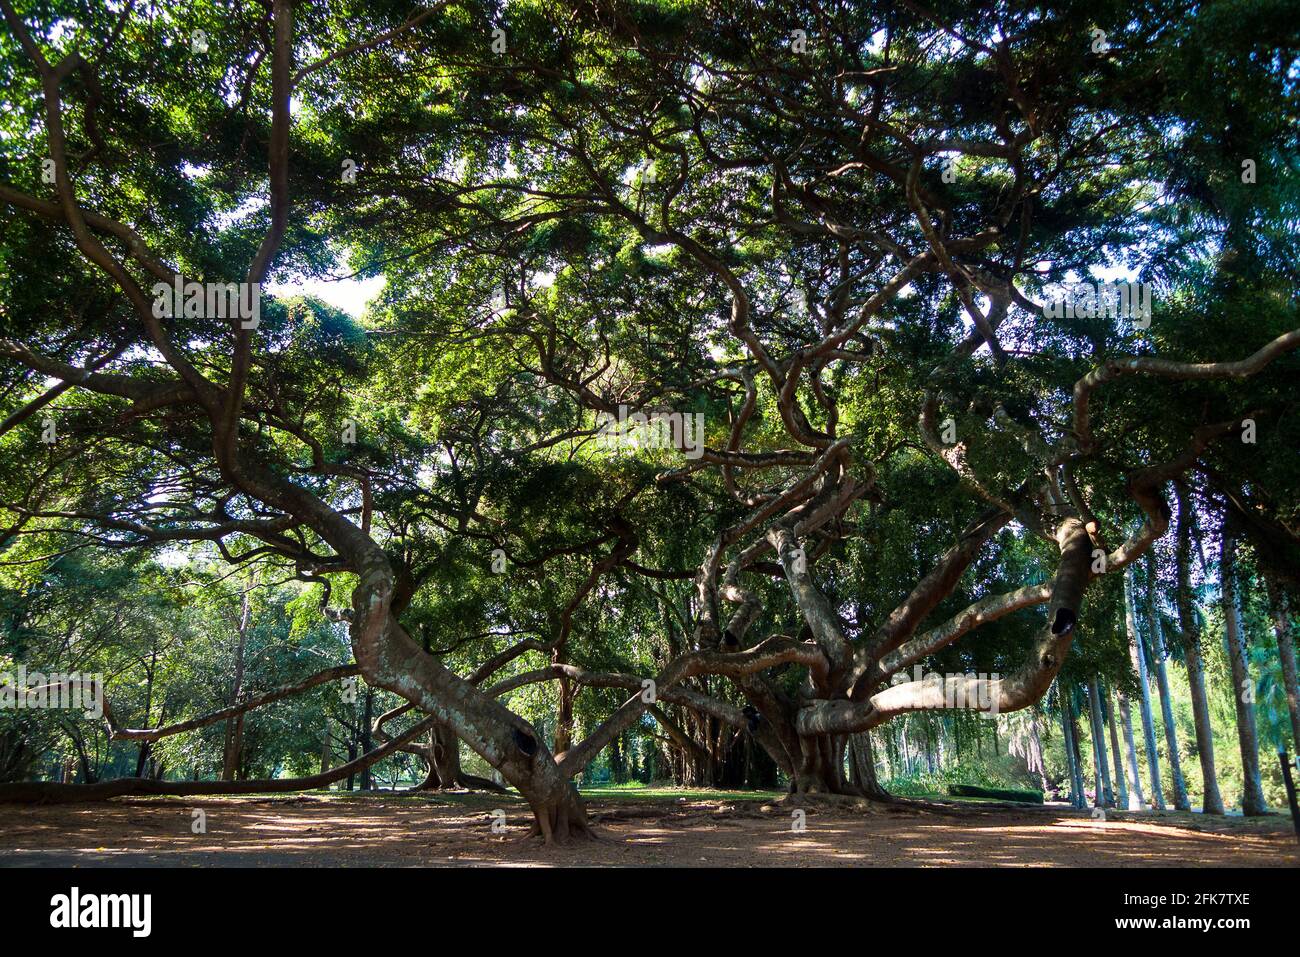 Kandy, Peradeniya botanical garden, Sri Lanka: large trees with intertwined branches Stock Photo